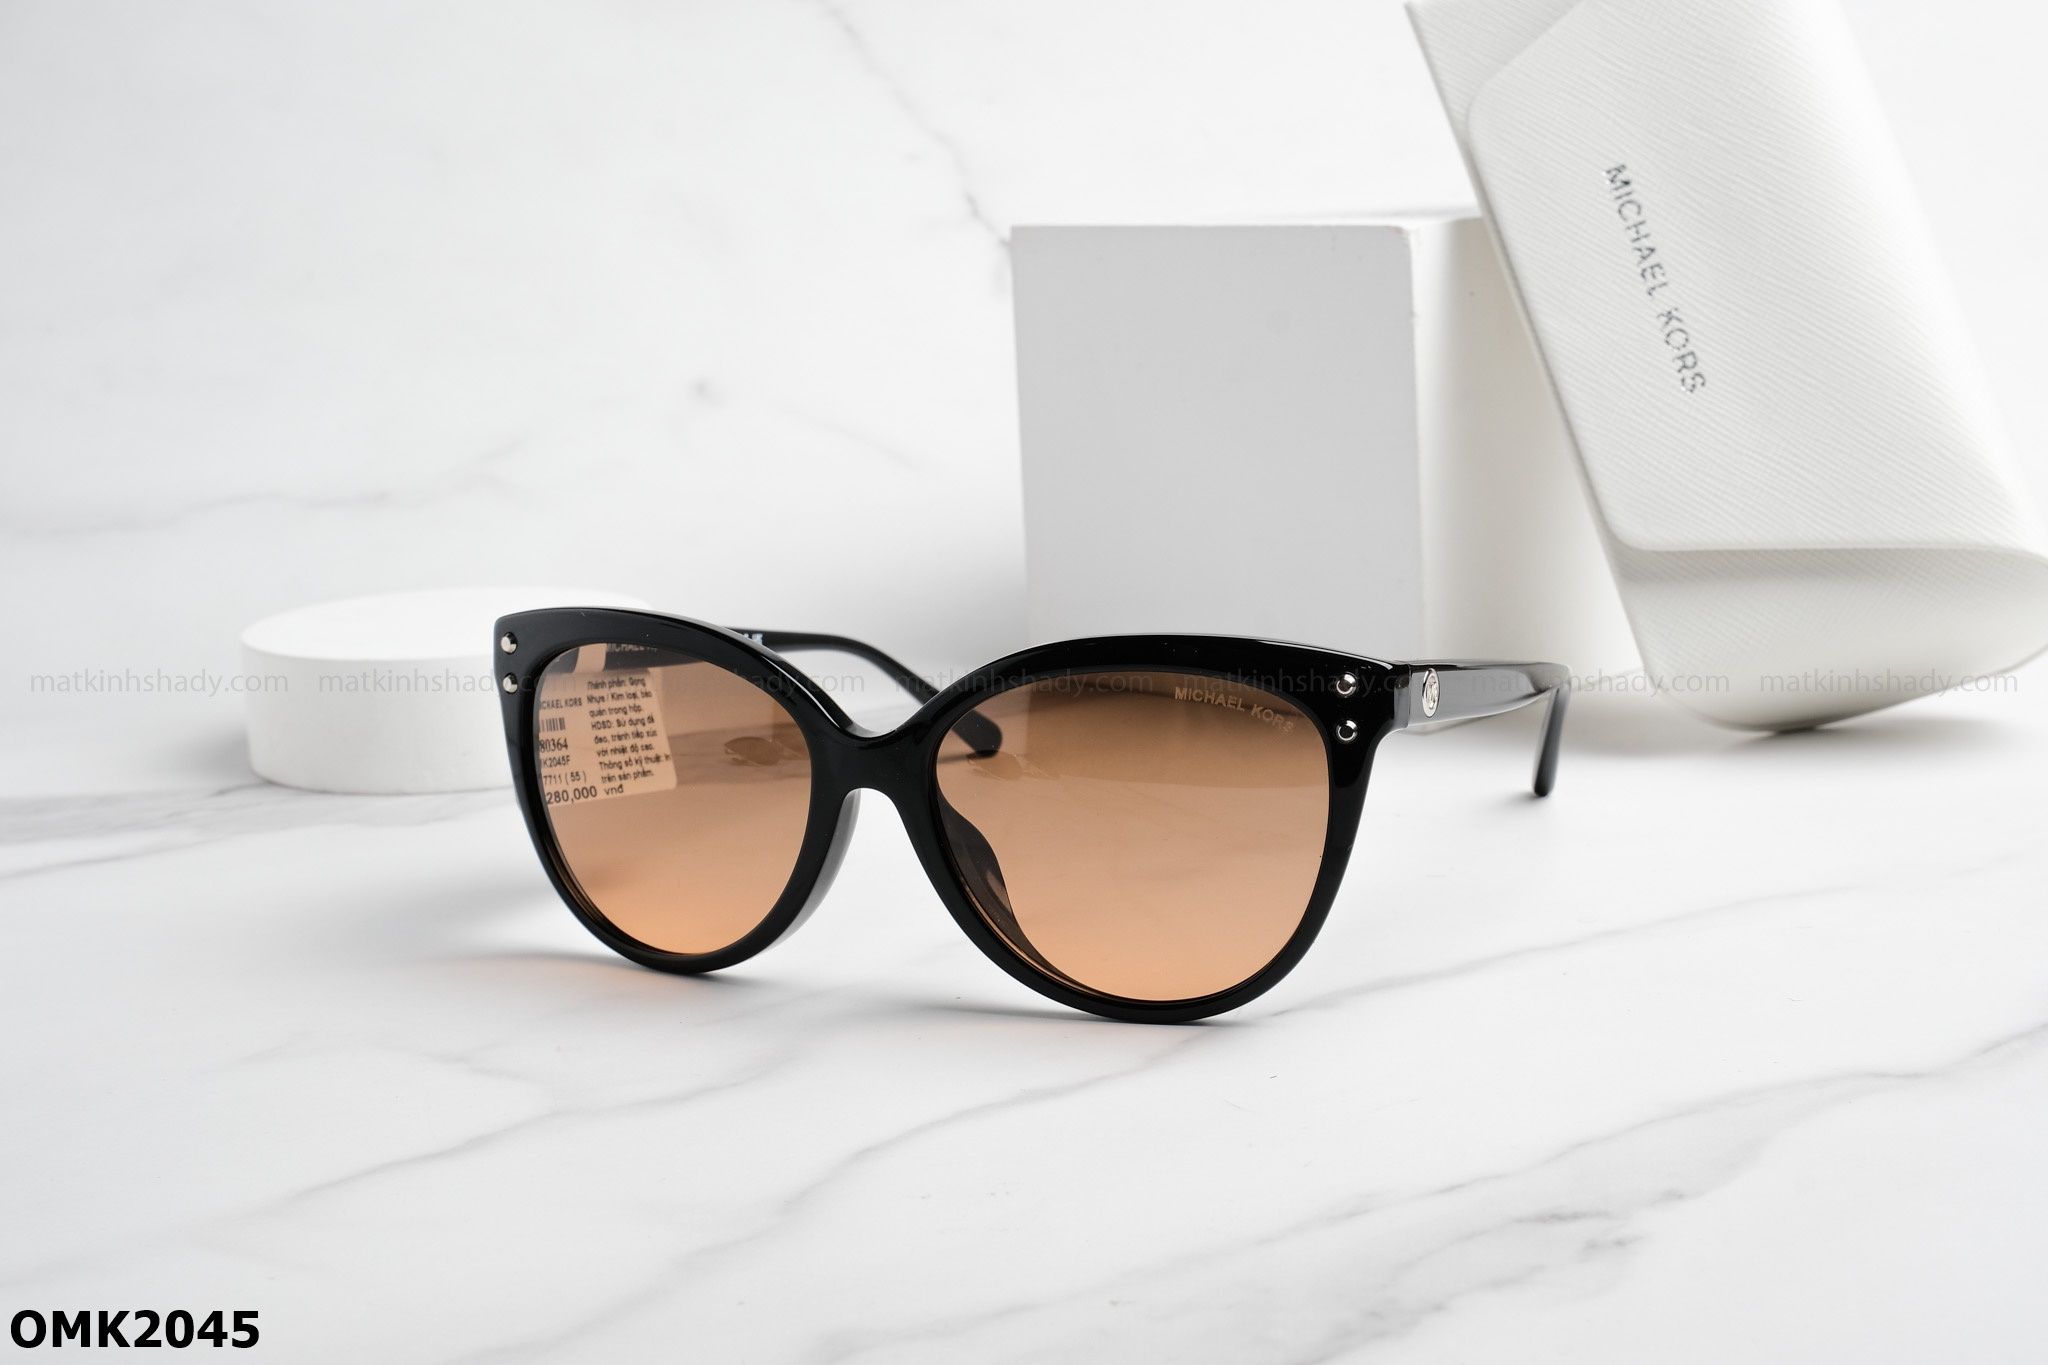  Michael Kors Eyewear - Sunglasses - OMK2045 